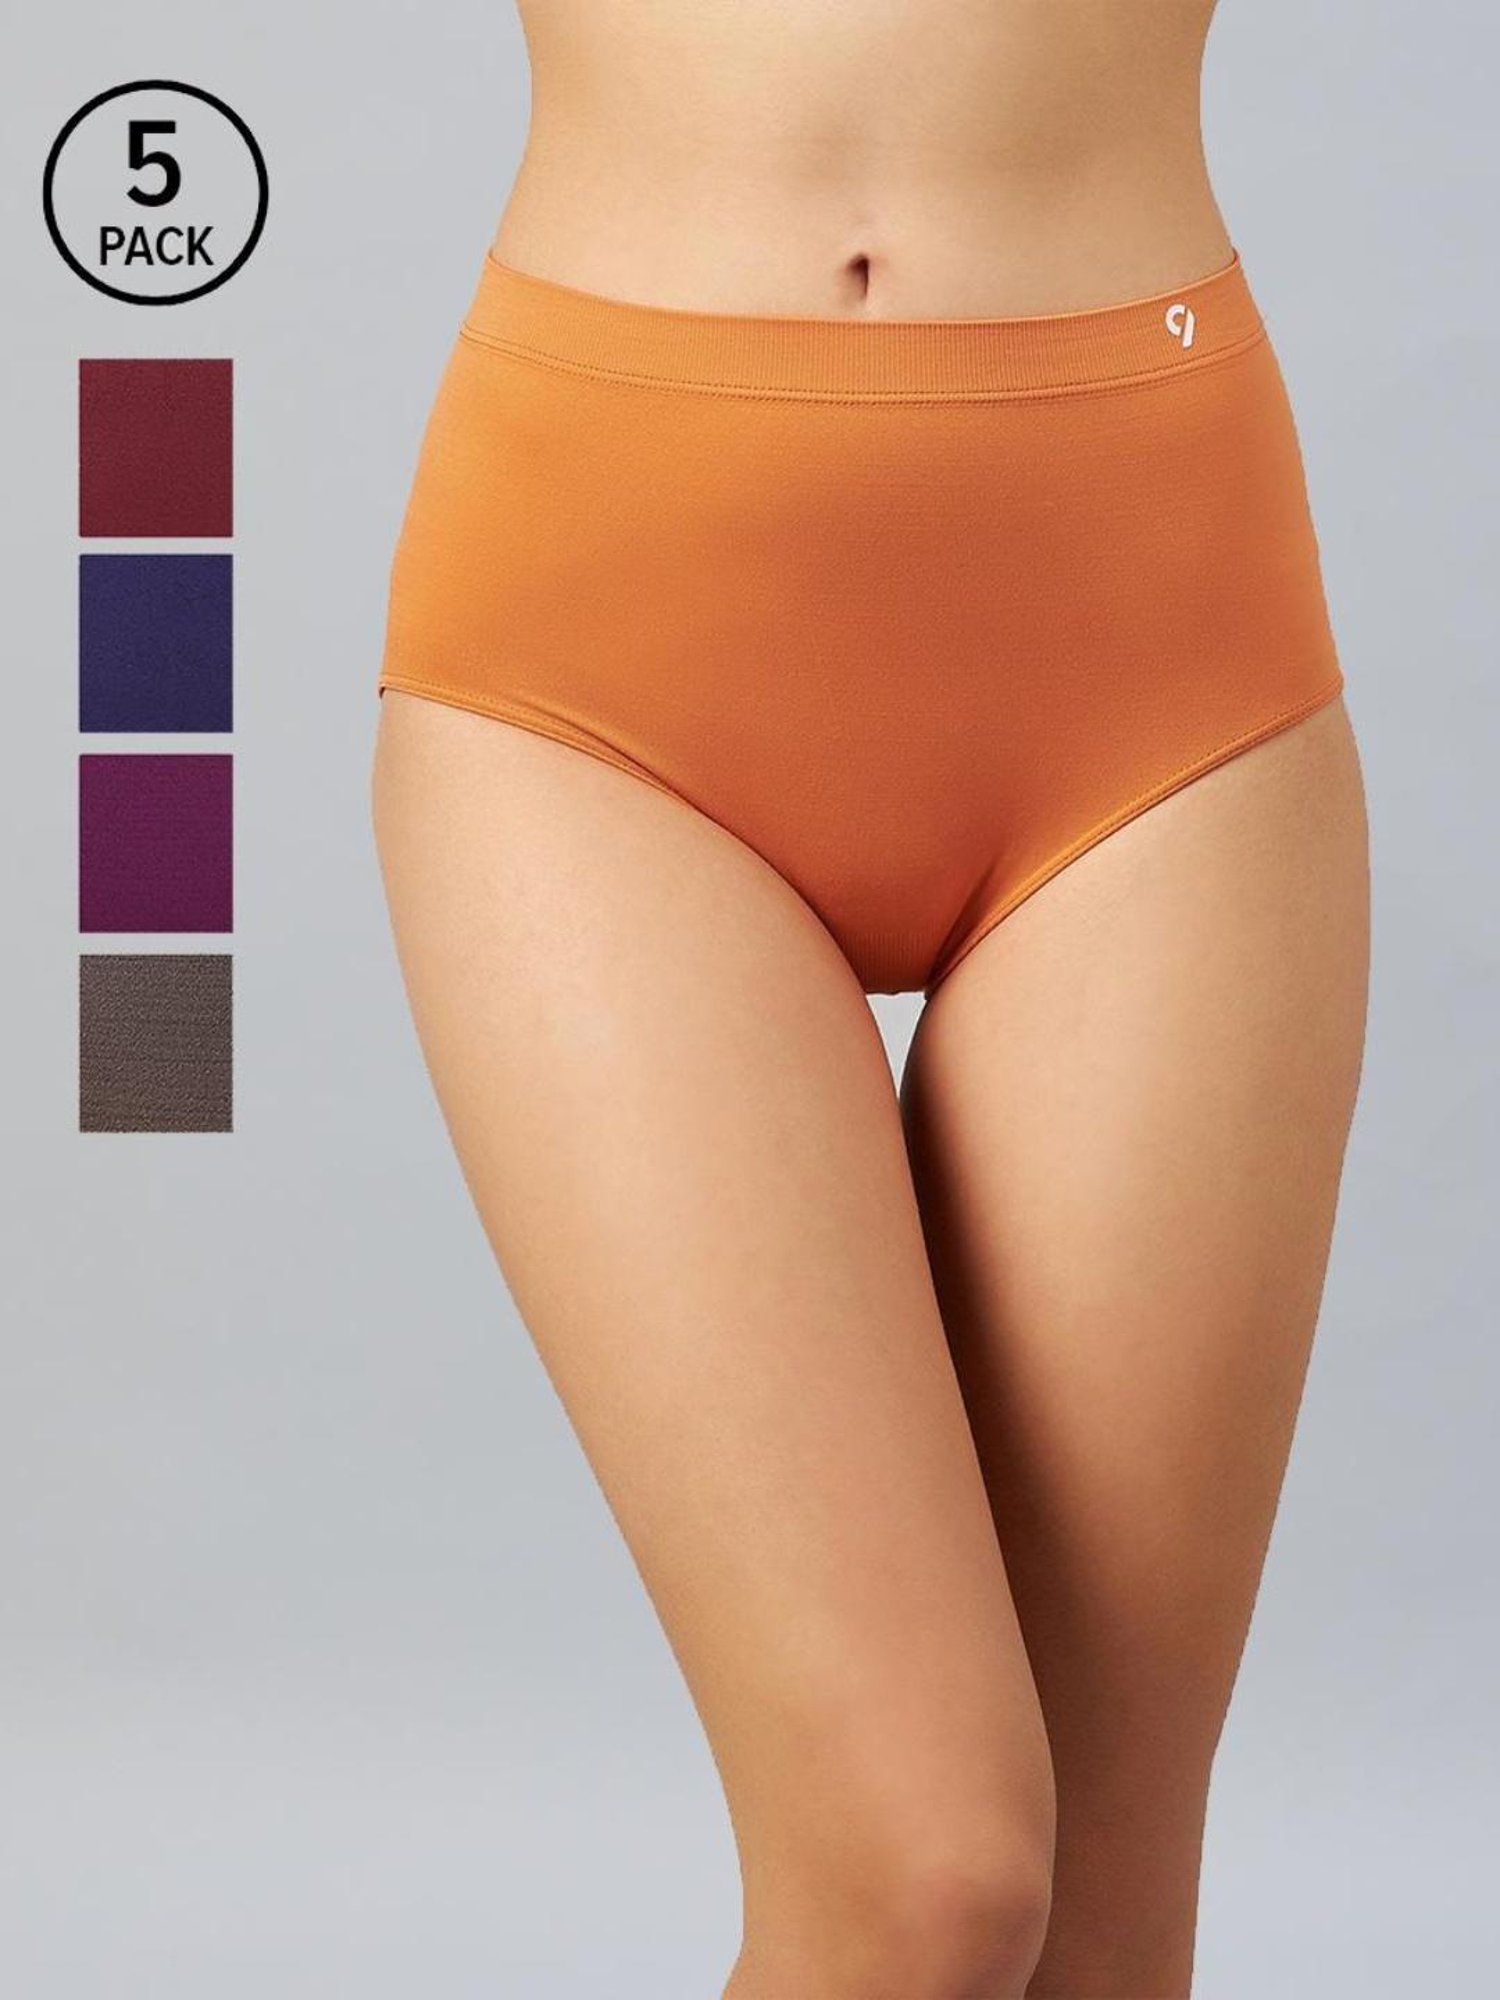 Buy C9 Airwear Women's Multicolor Panty Pack online